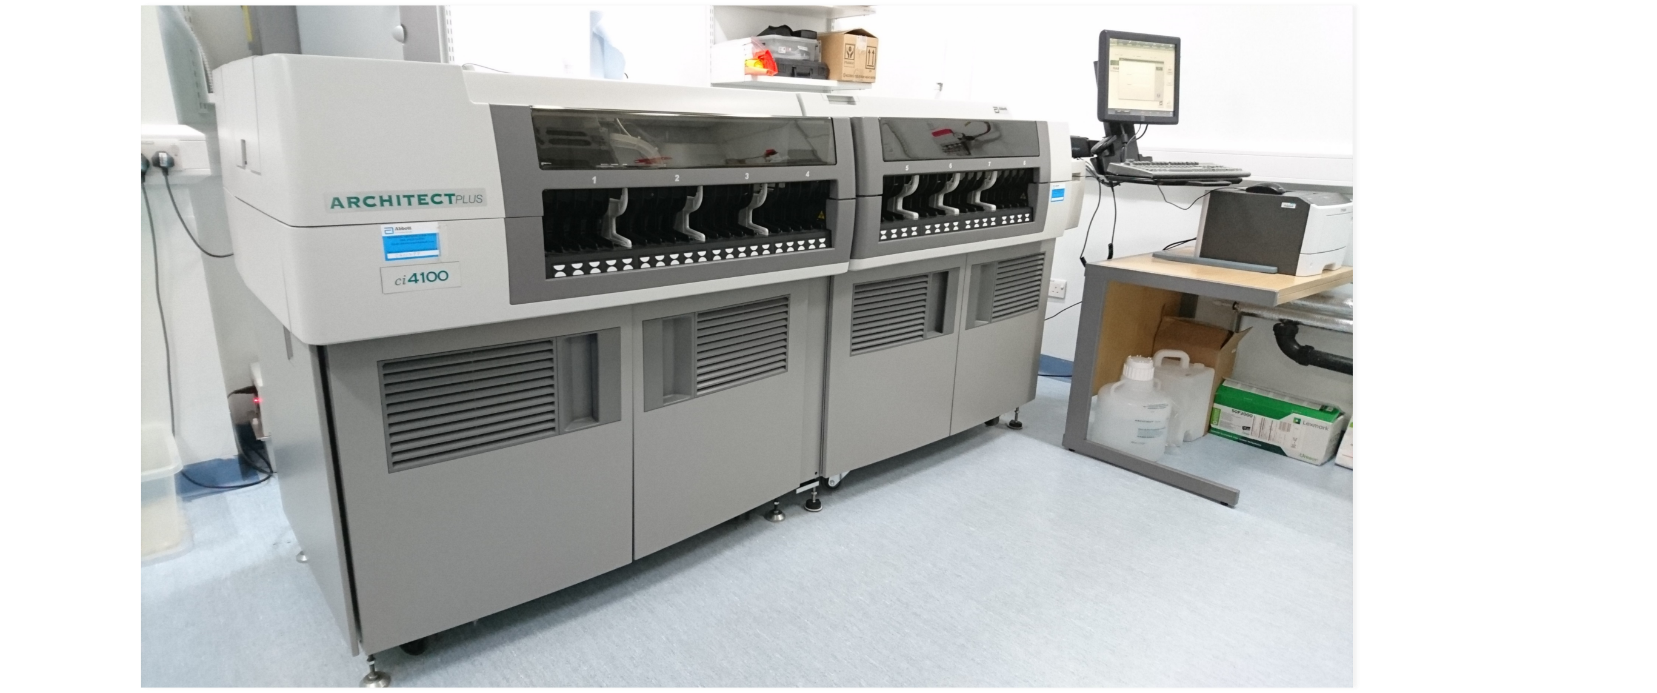 Image of biomarker ARCHITECT ci4100 instrument